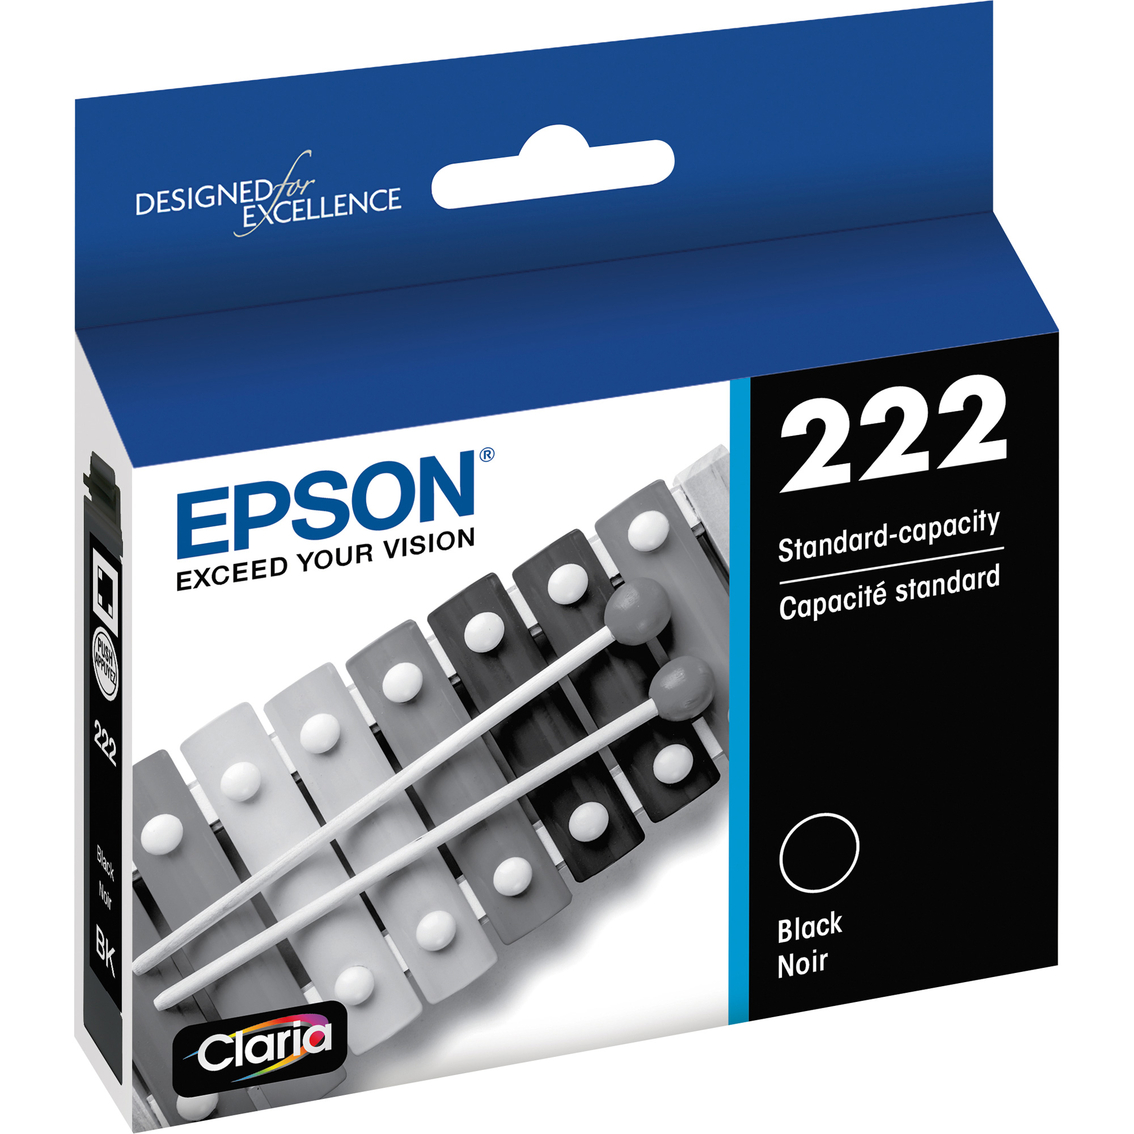 Epson T222 Black Ink Cartridge, Standard Capacity with Sensor - Image 2 of 2